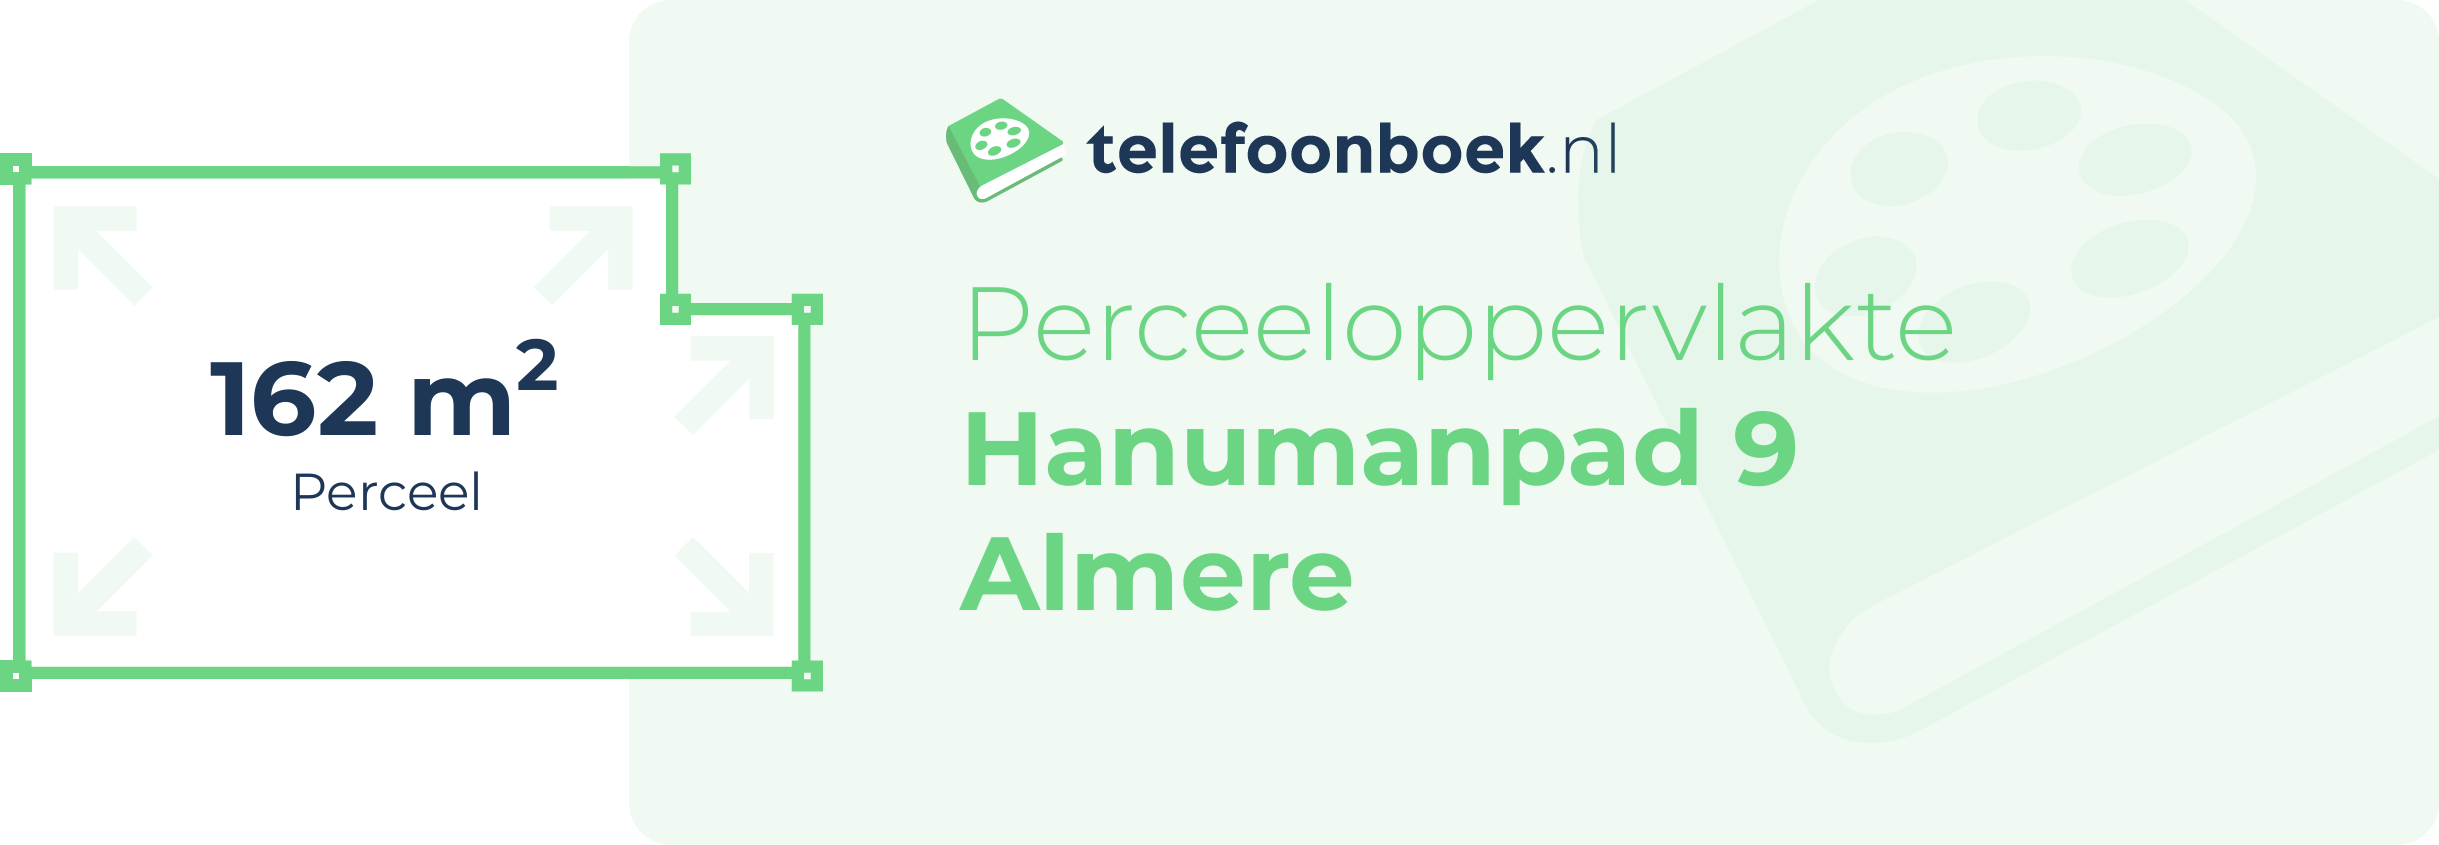 Perceeloppervlakte Hanumanpad 9 Almere